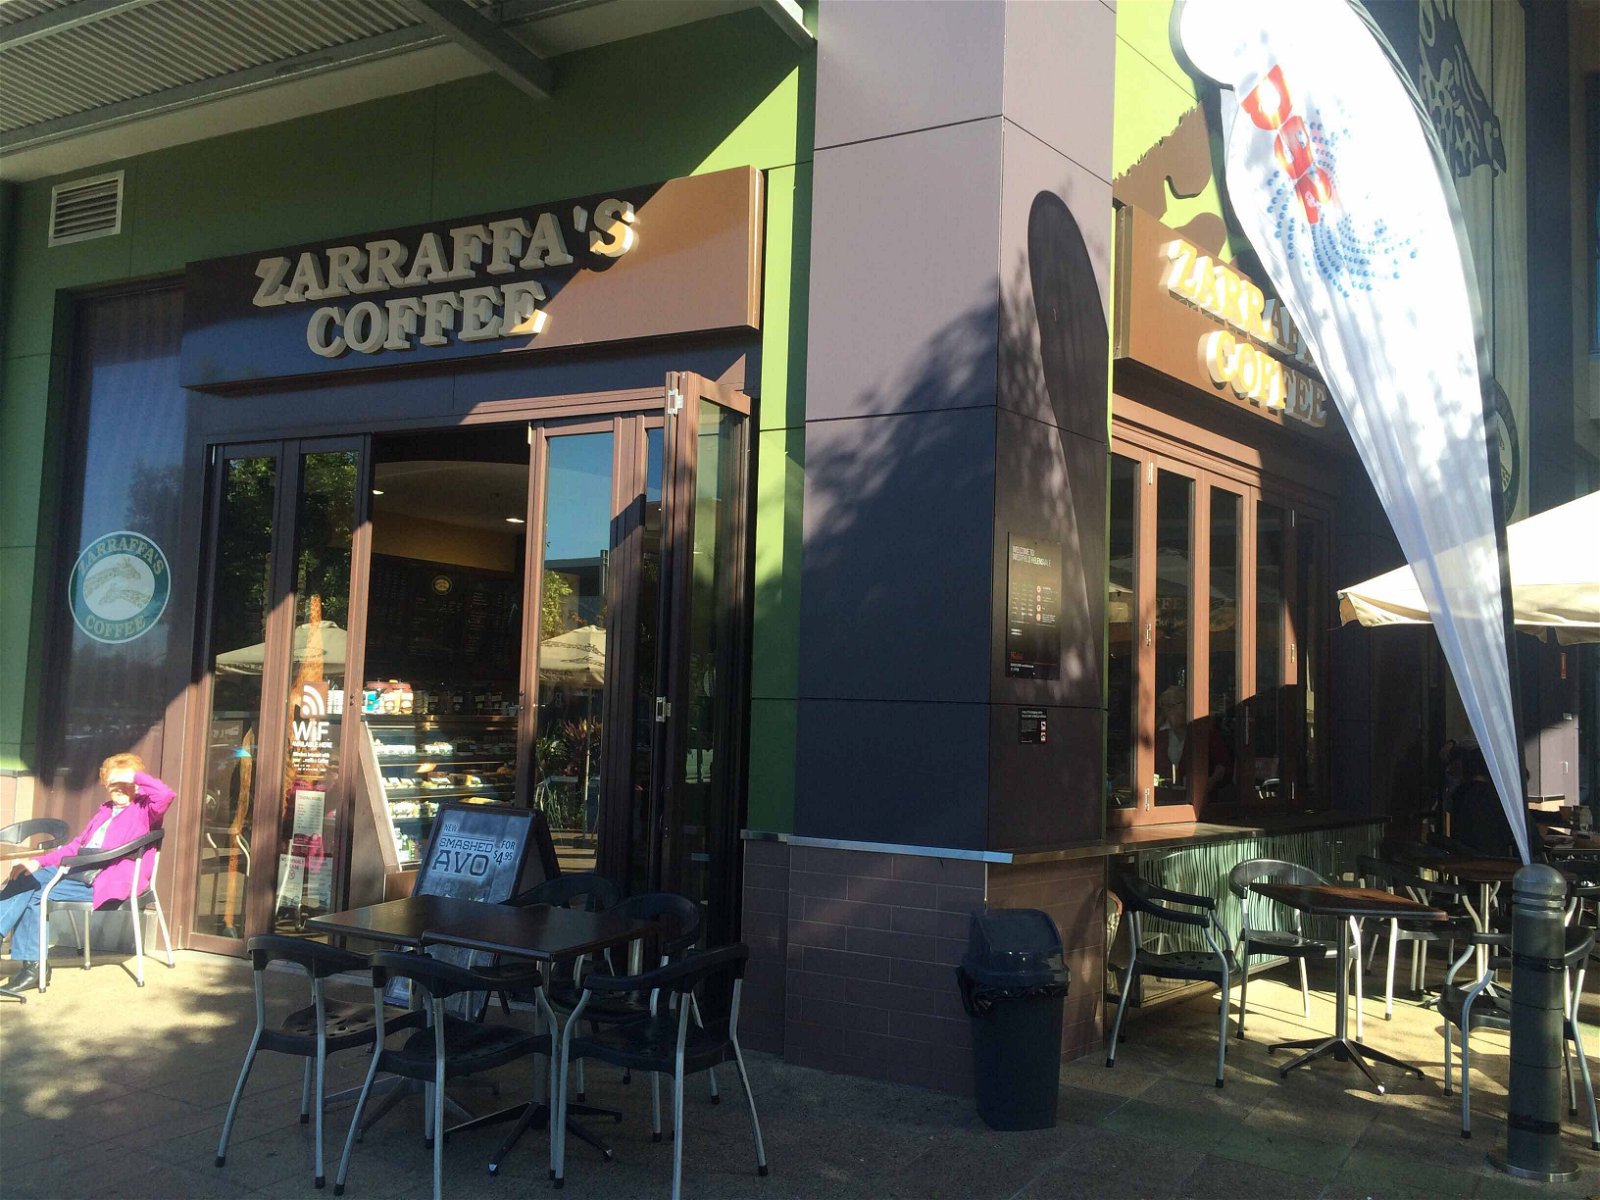 Zarraffa's Coffee - Food Delivery Shop